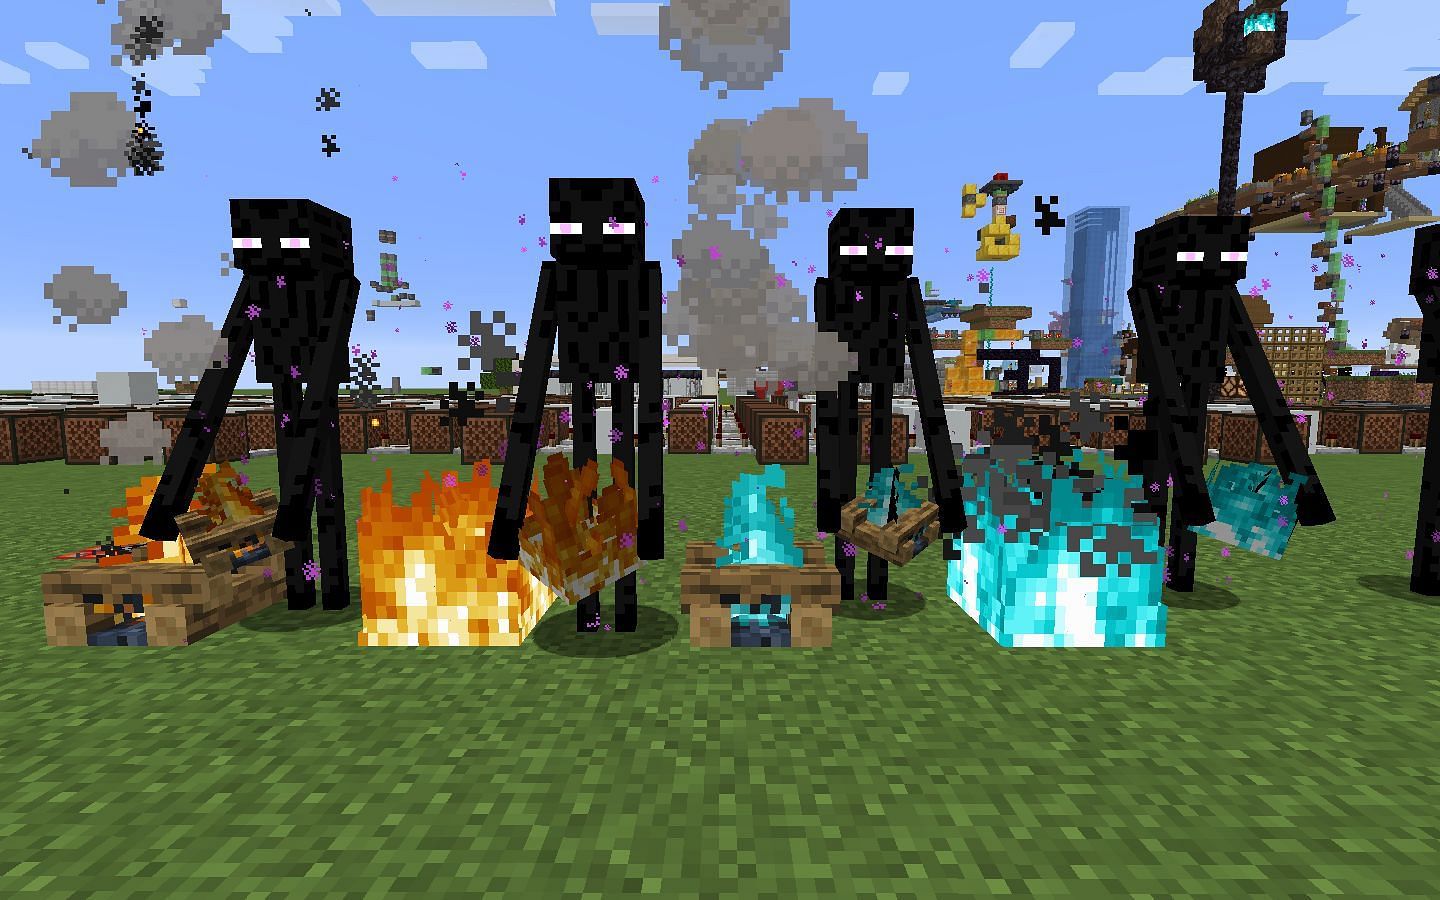 Endermen avoid fire (Image via Minecraft)